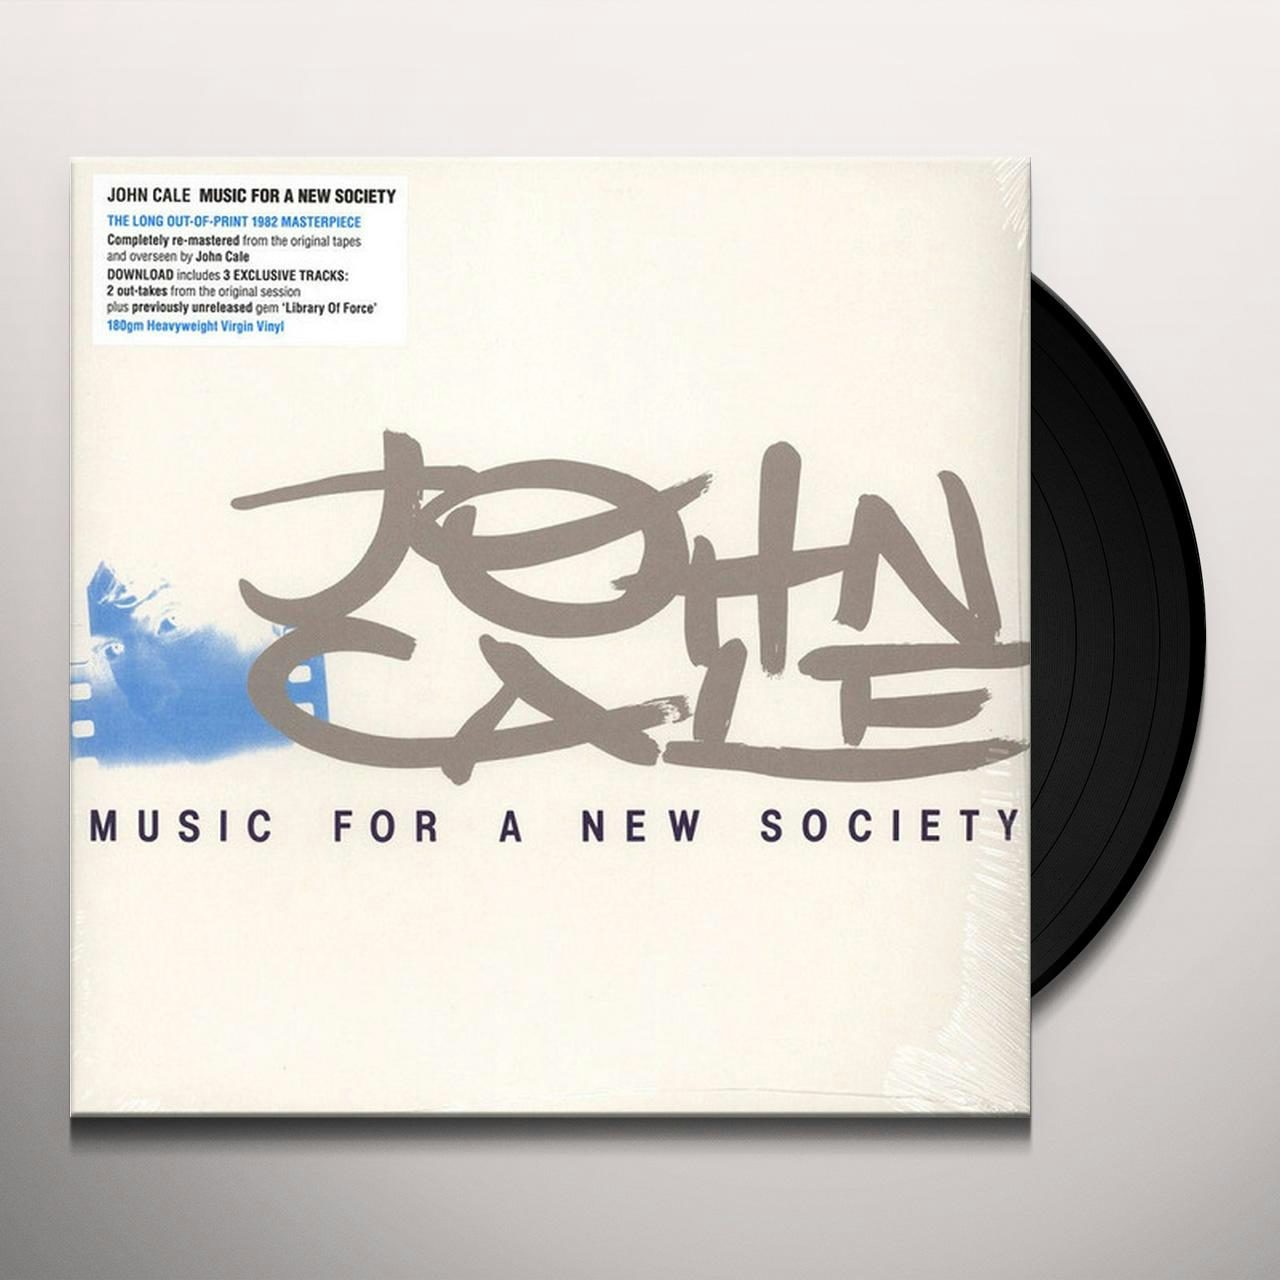 New society. John Cale. John Cale Music.